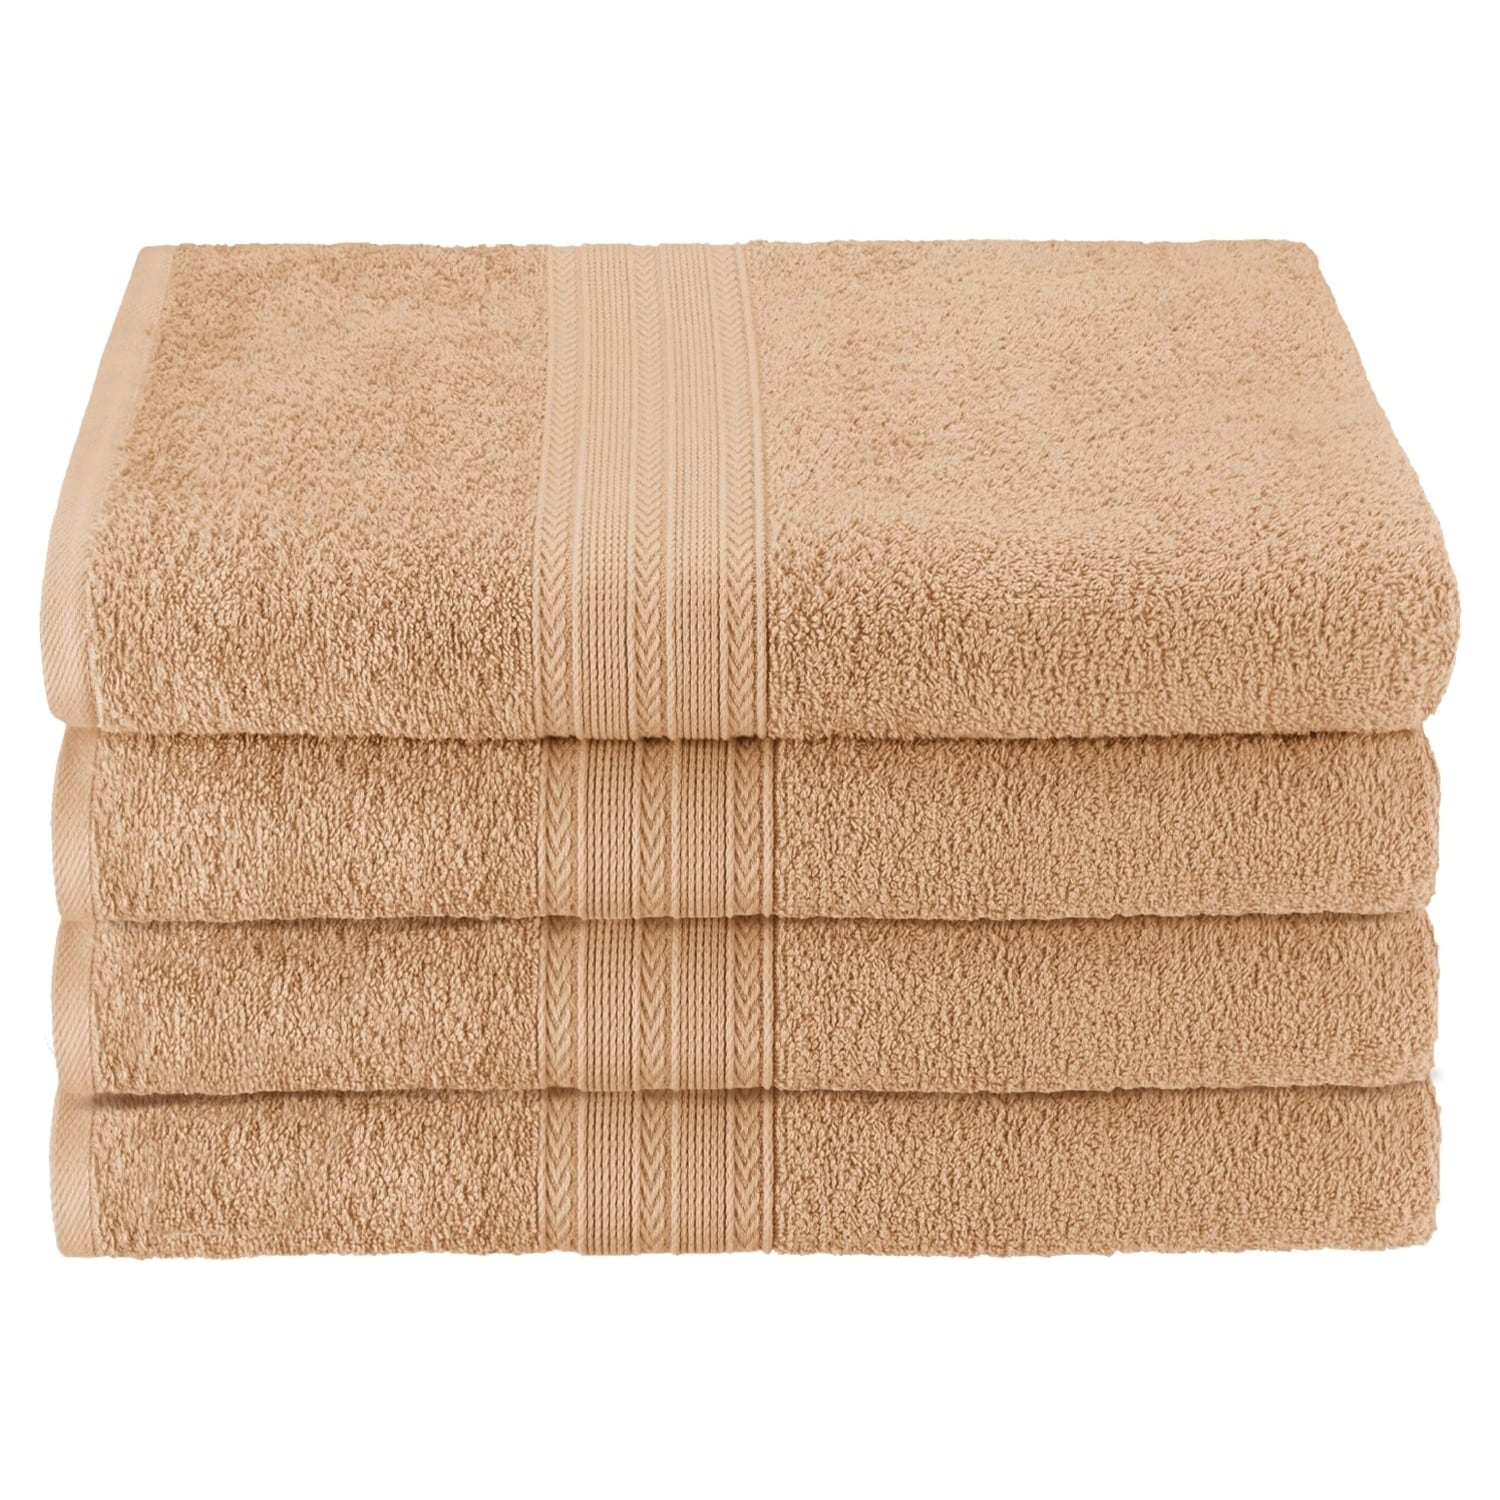 Miranda Haus Eco Friendly Cotton Soft and Absorbent Bath Towel (set of 4)